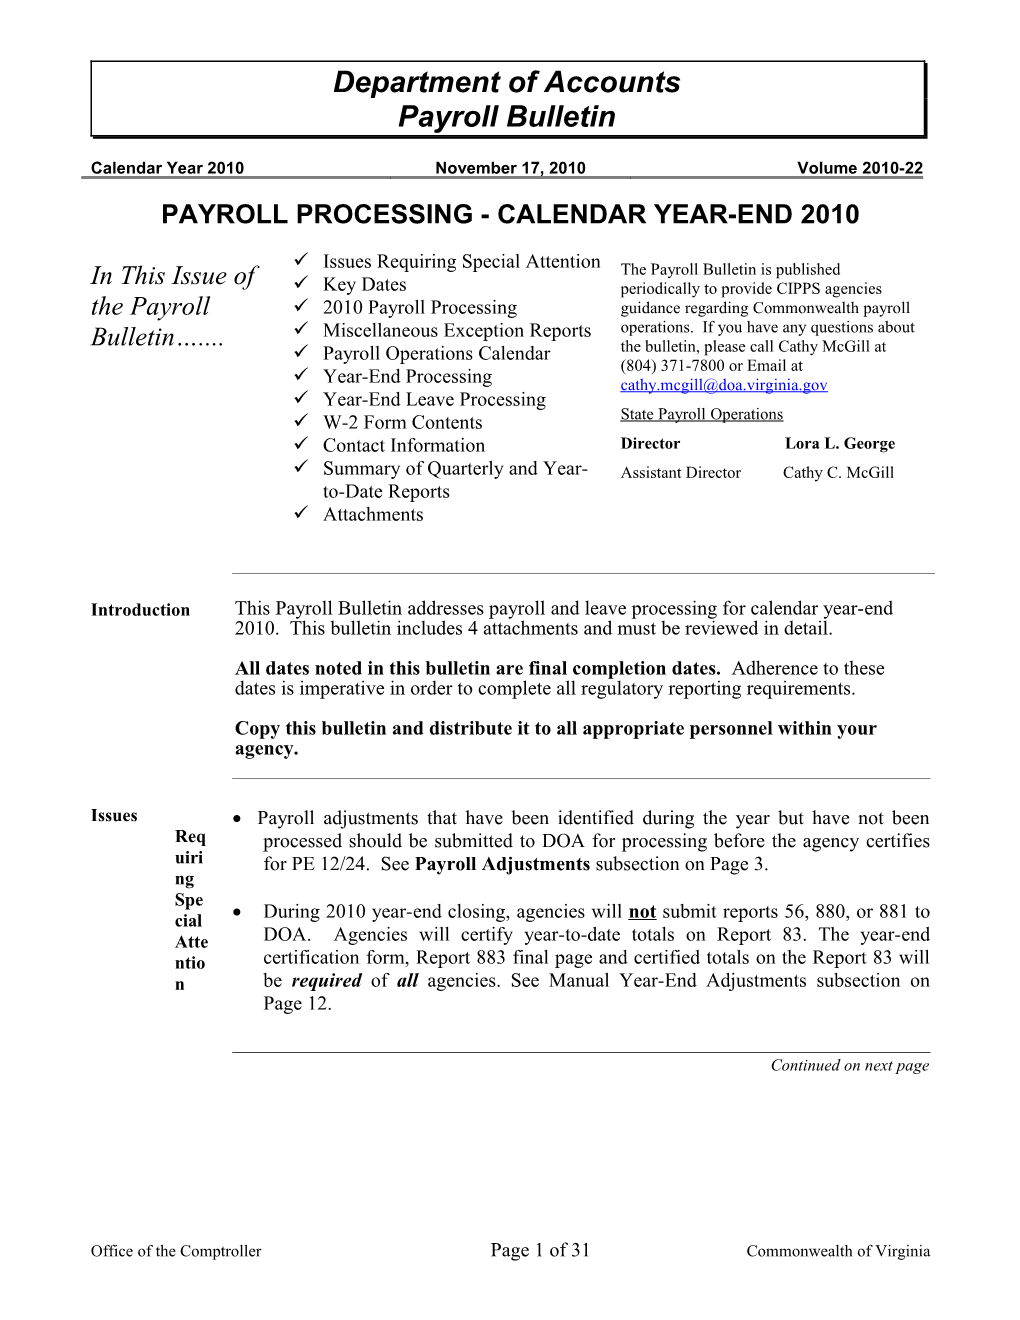 Payroll Processing - Calendar Year-End2010